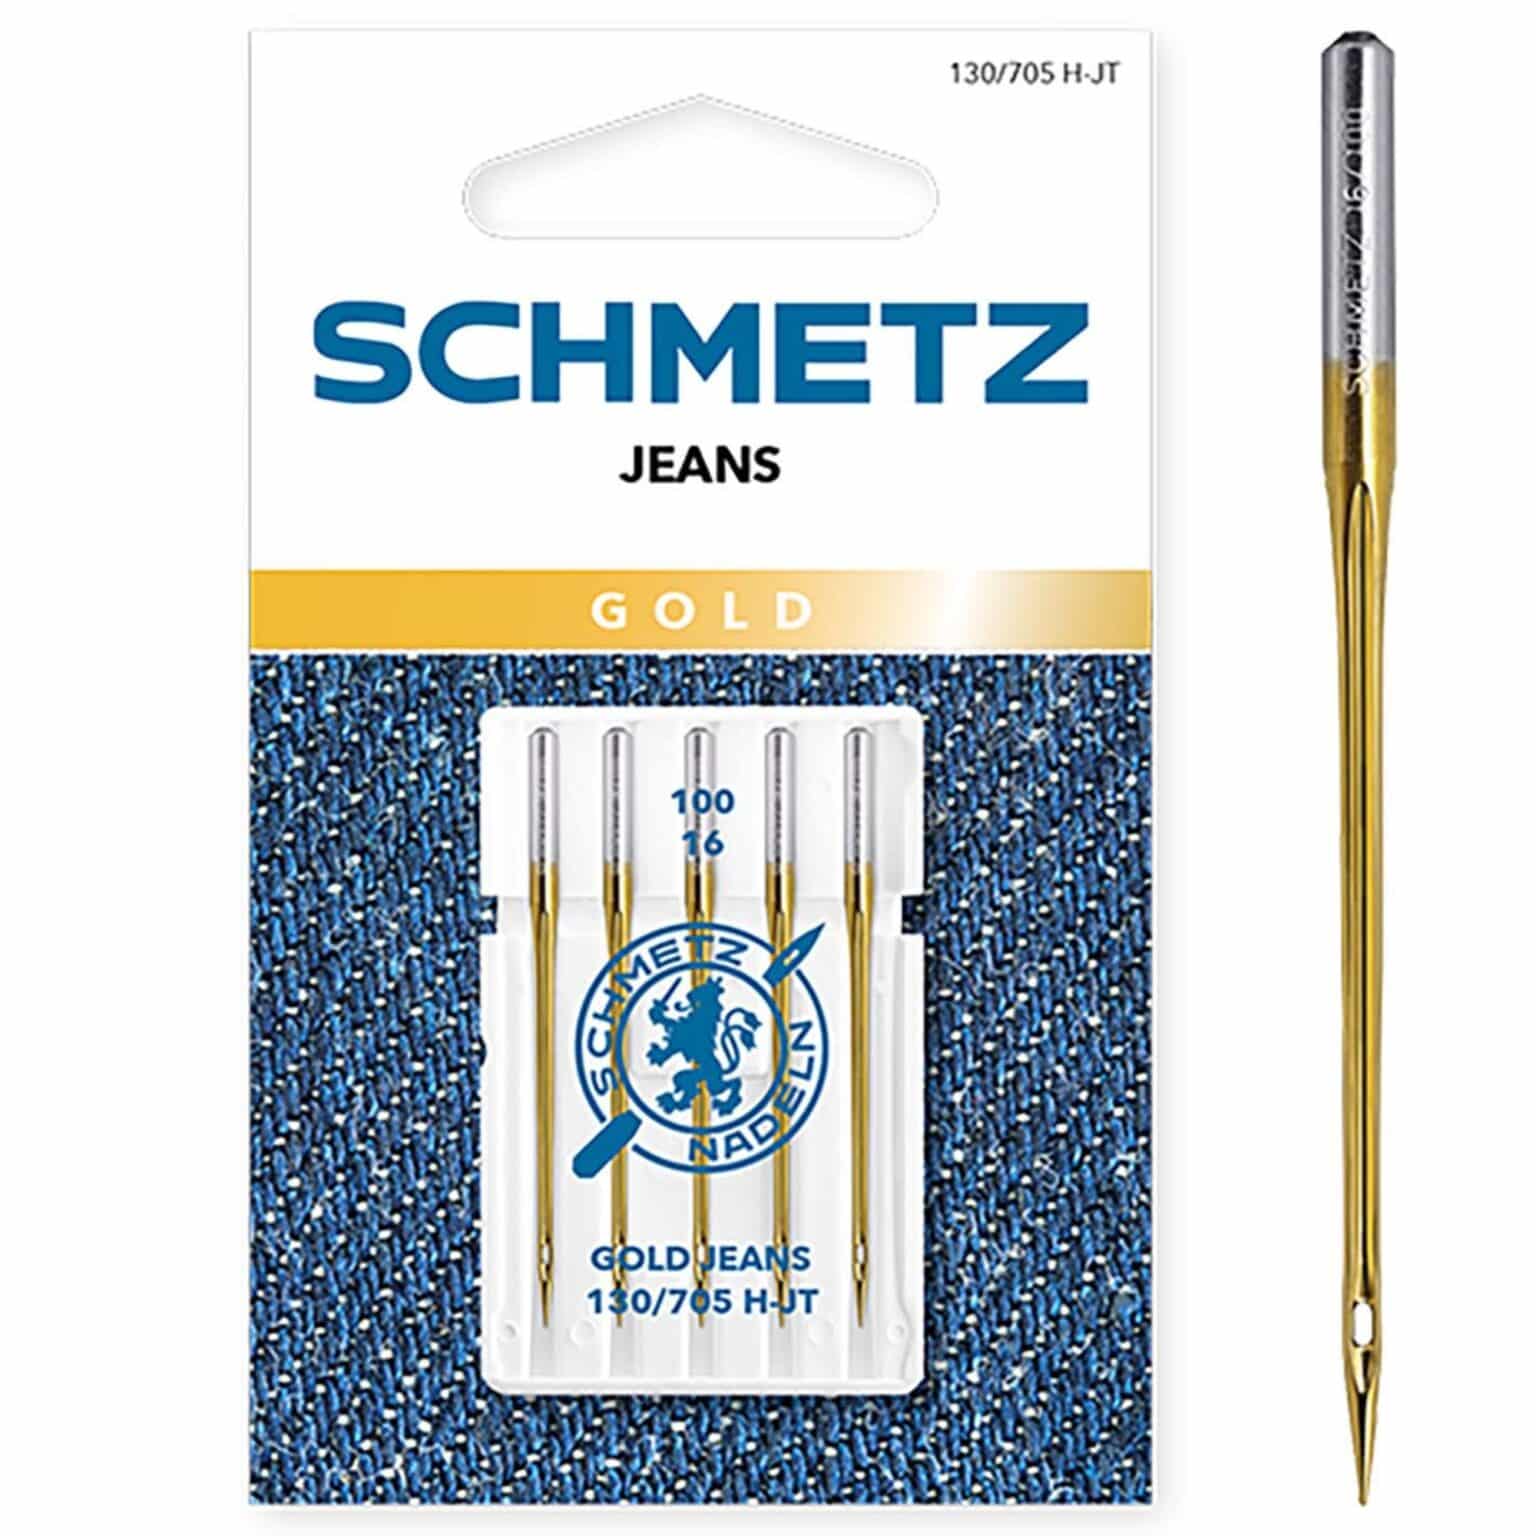 Schmetz Jeans Gold Sewing Machine Needles - Size 100/16